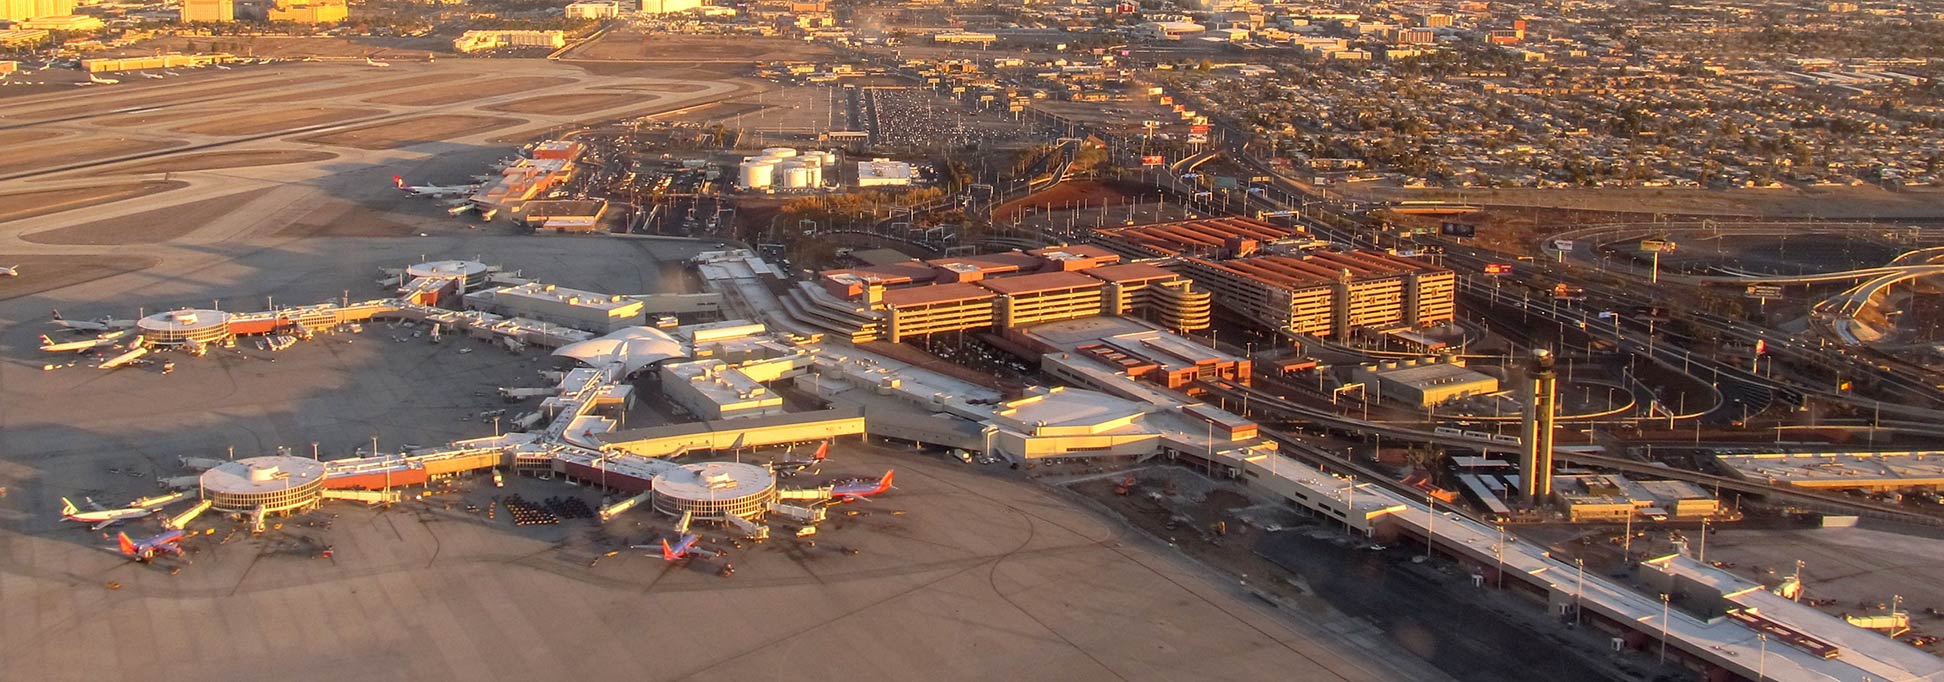 Mccarran International Airport, Las Vegas, Nevada, USA